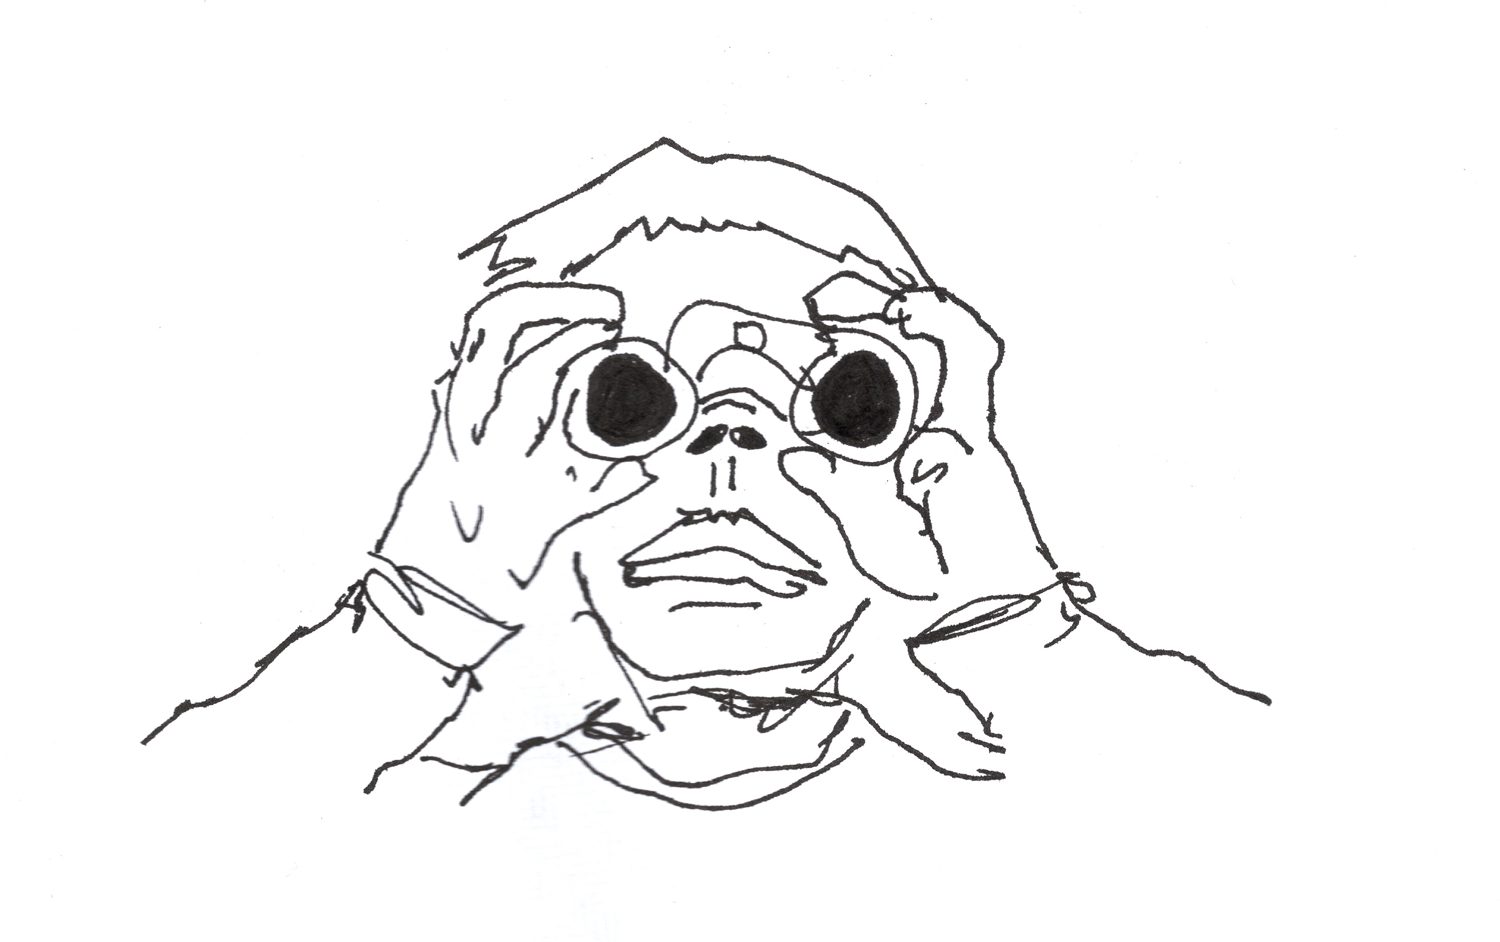 Illustration of someone looking through binoculars